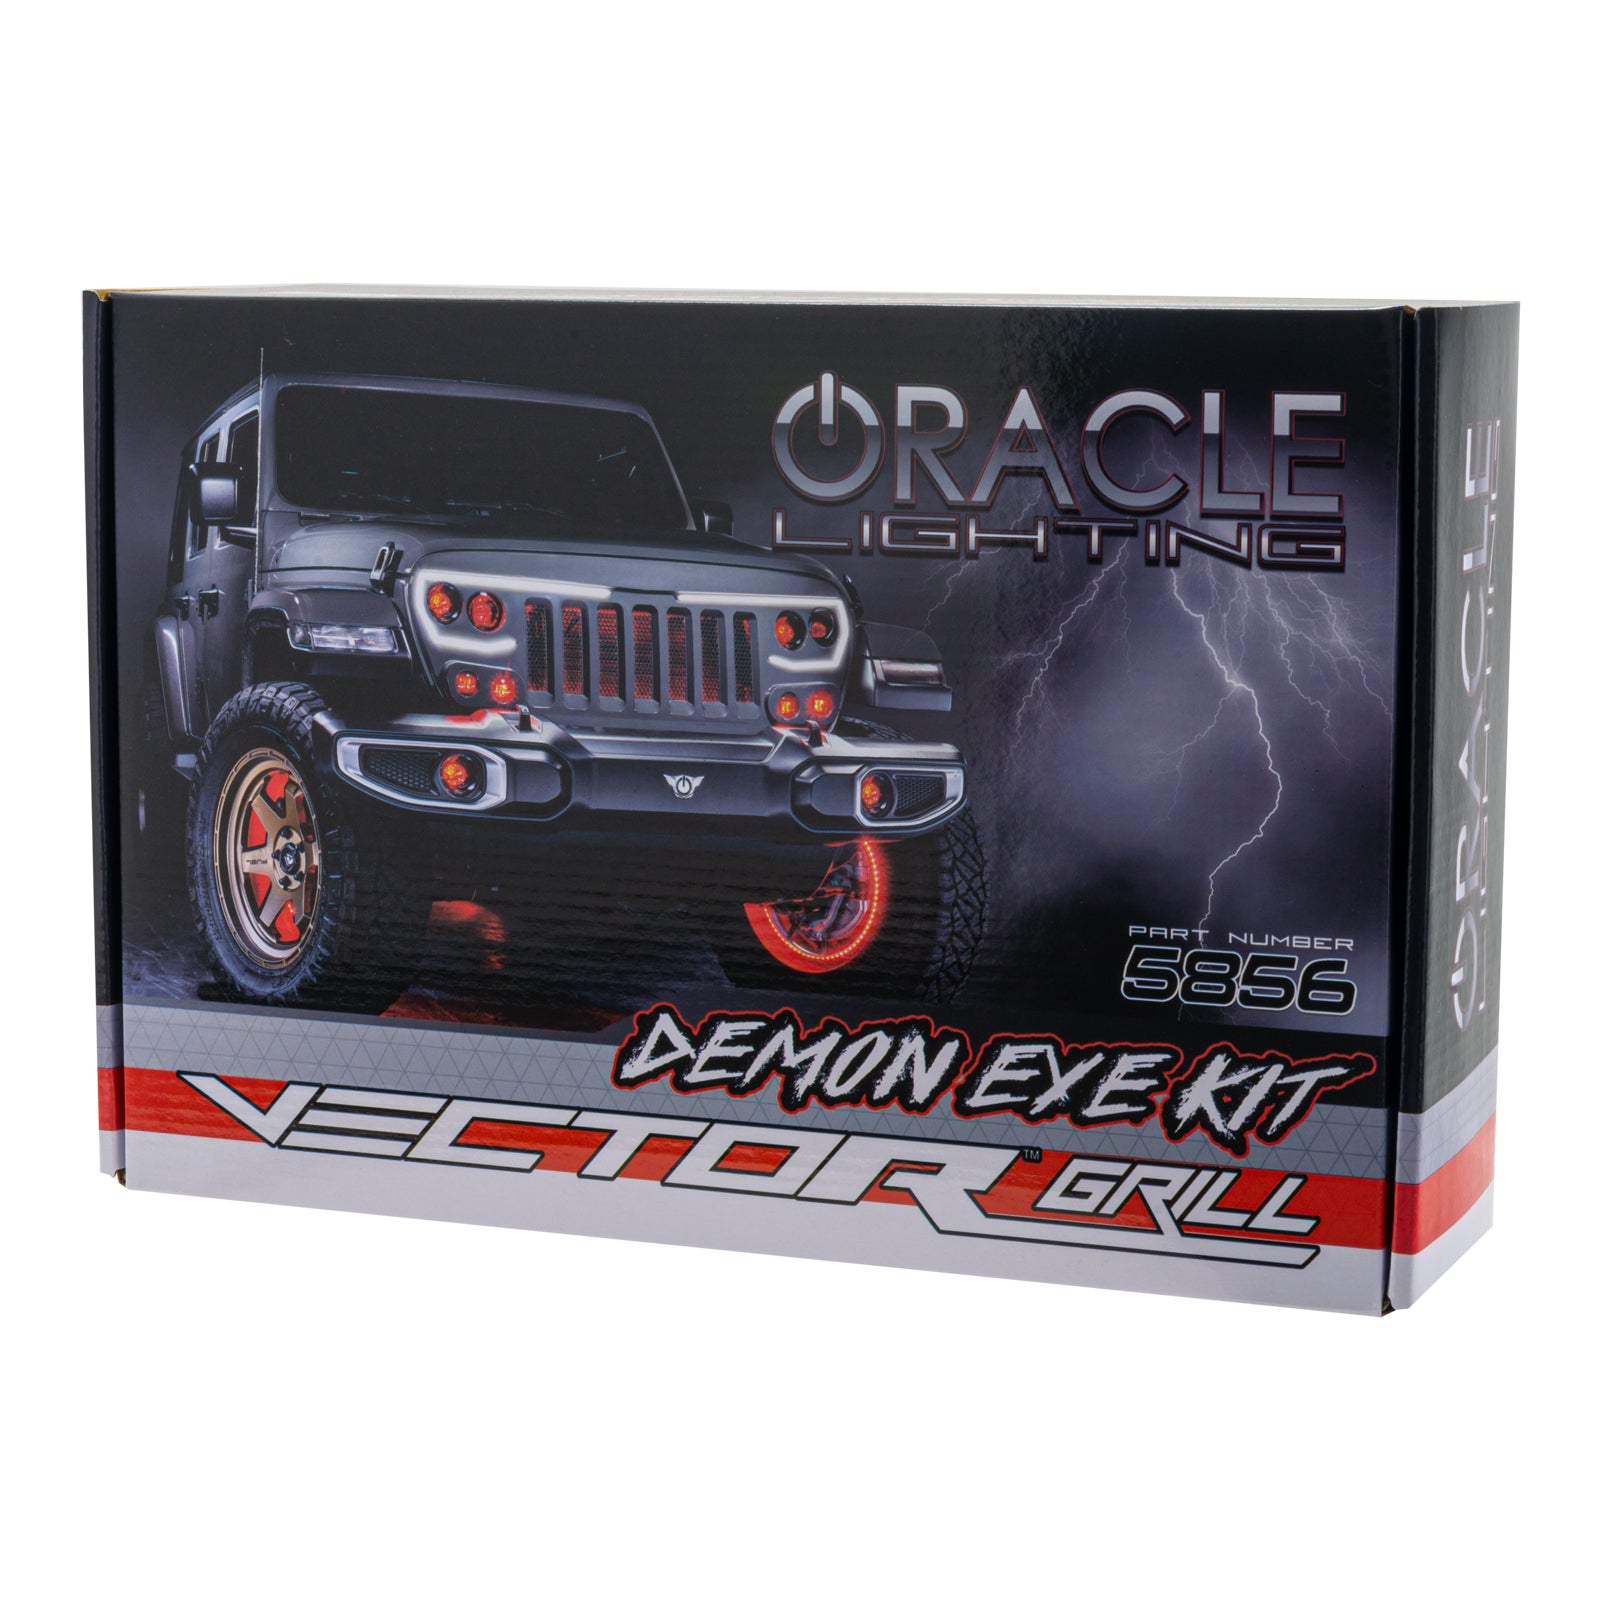 ORACLE Lighting Jeep Wrangler JK JL JT VECTOR Grill Demon Eye ColorSHIFT Projector Conversion Kit 5856-334